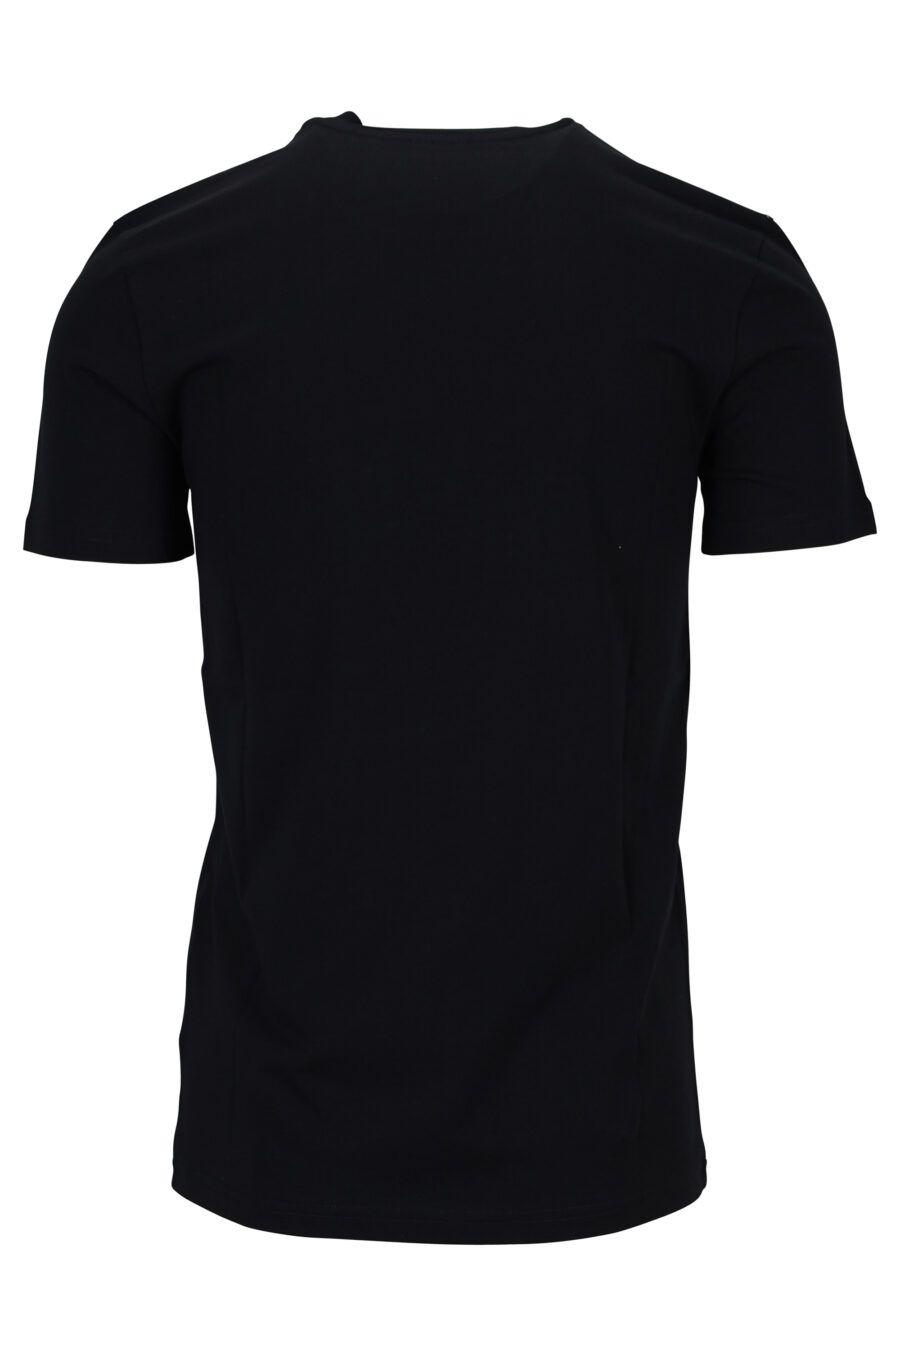 Black organic cotton T-shirt with white maxilogue - 889316648973 1